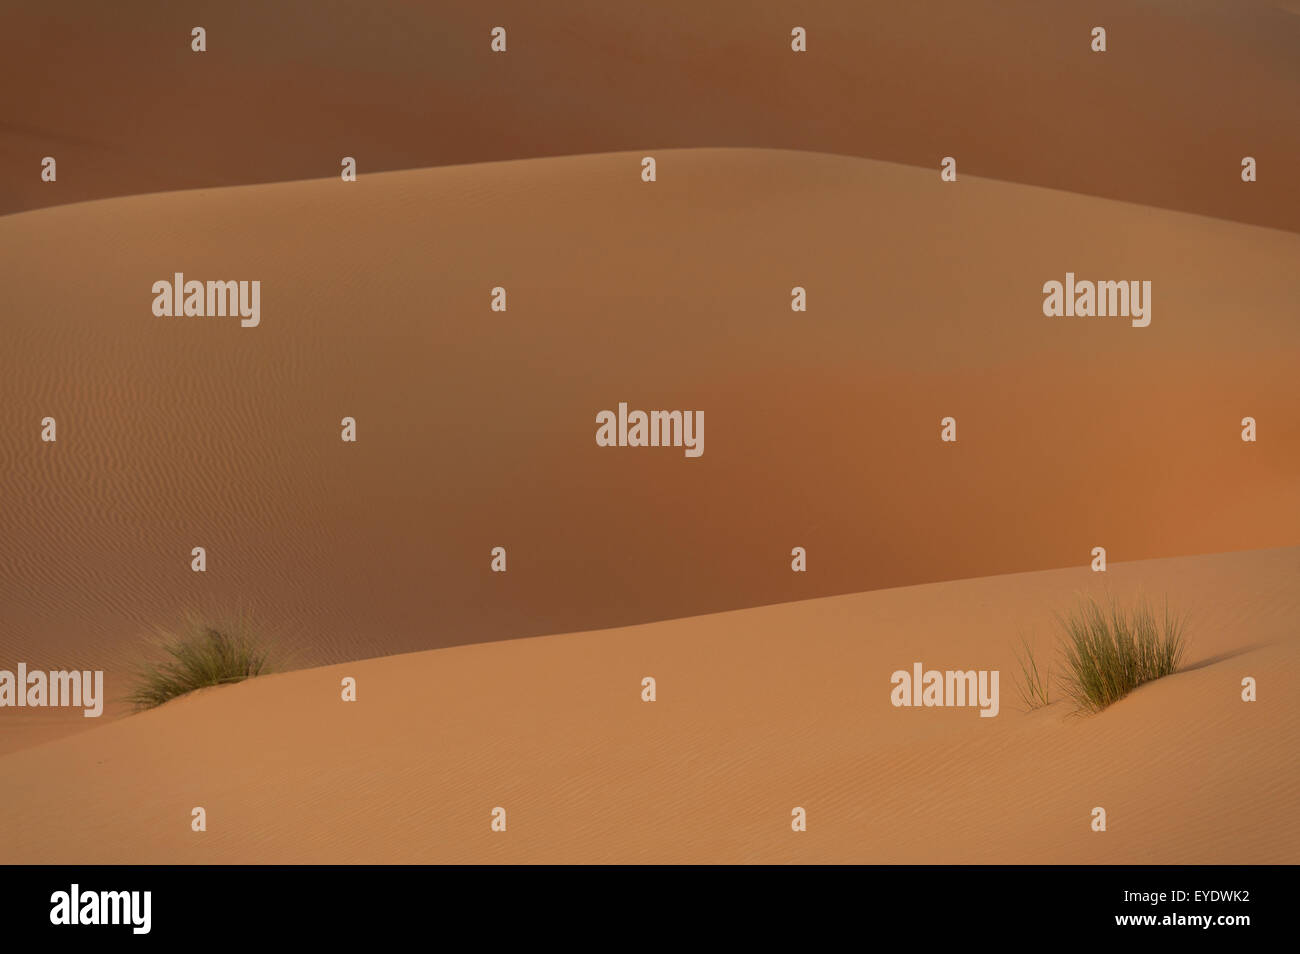 Detail Of Tufts Of Grass In Sand Dunes At Dusk,Liwa, Abu Dhabi, Uae Stock Photo